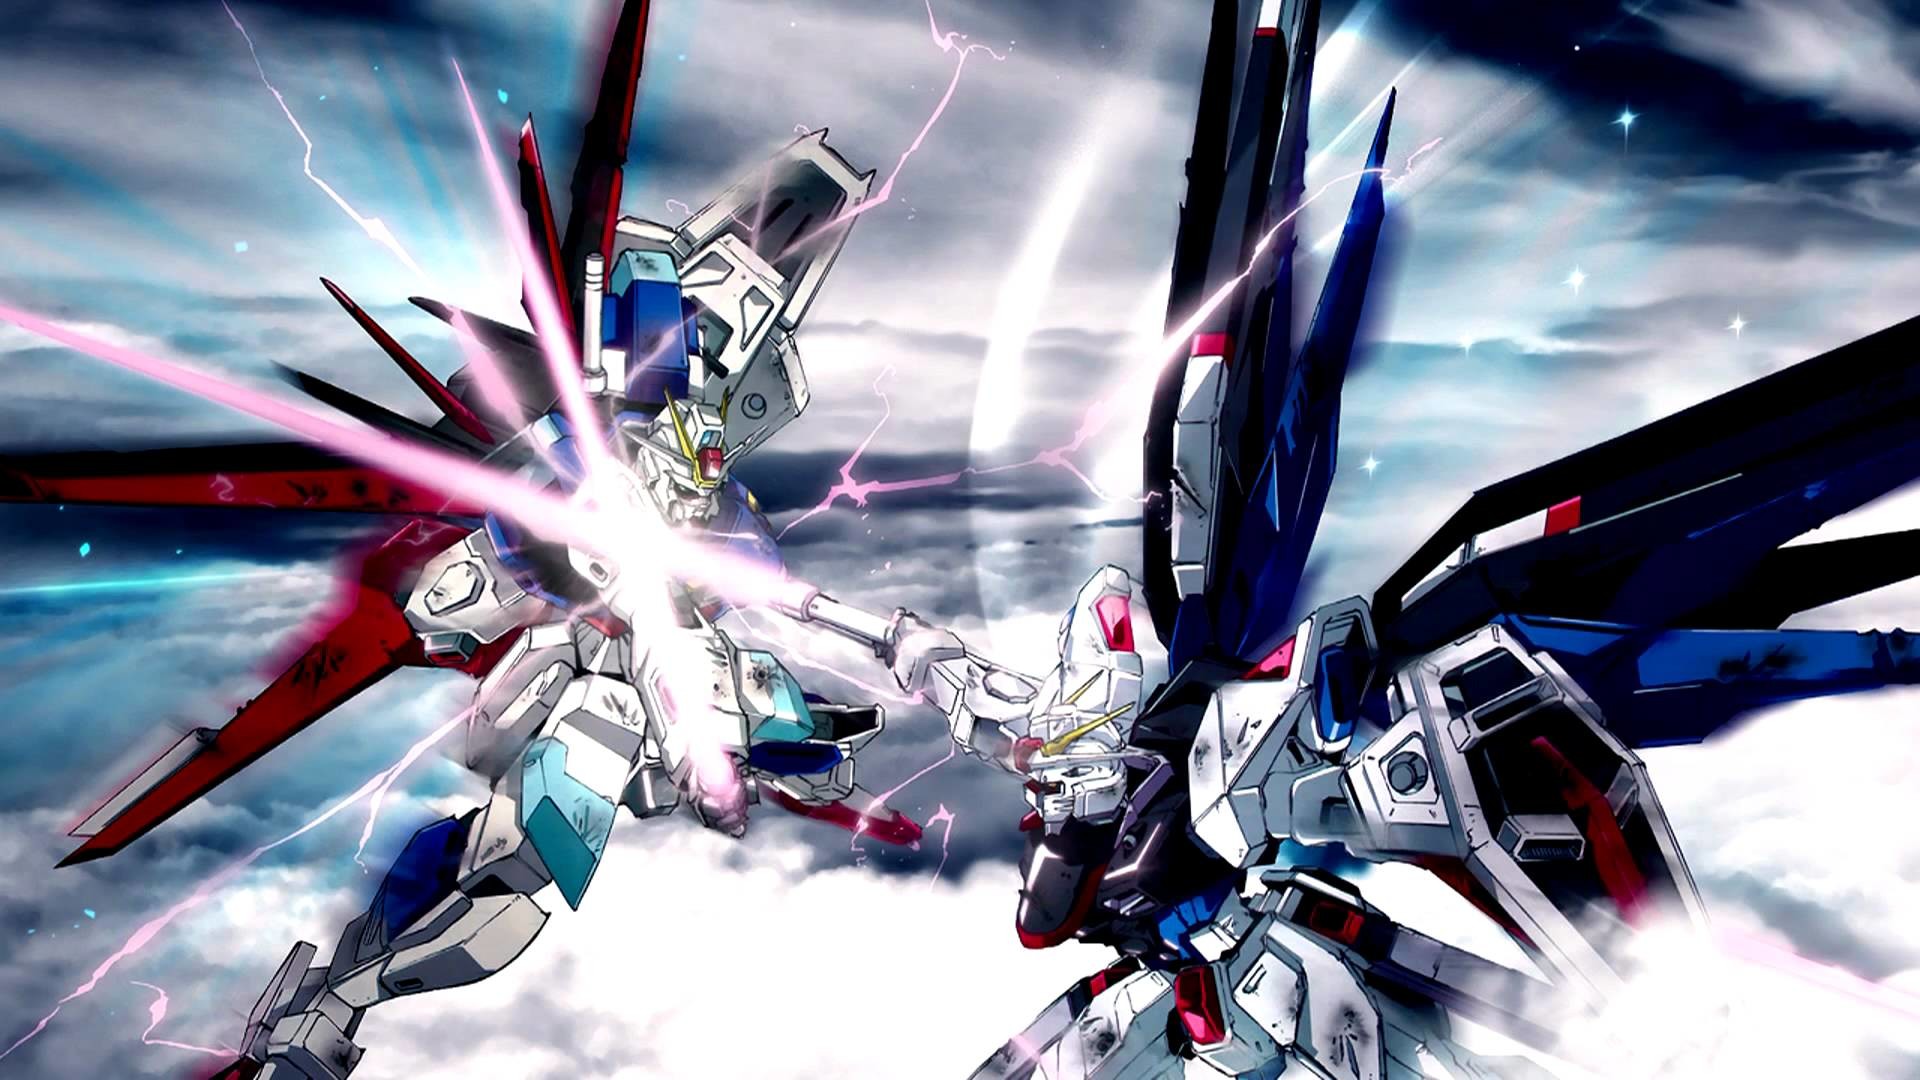 1920x1080 Greatest Battle Music Of All time: Decisive Battle (Gundam 00) - YouTube